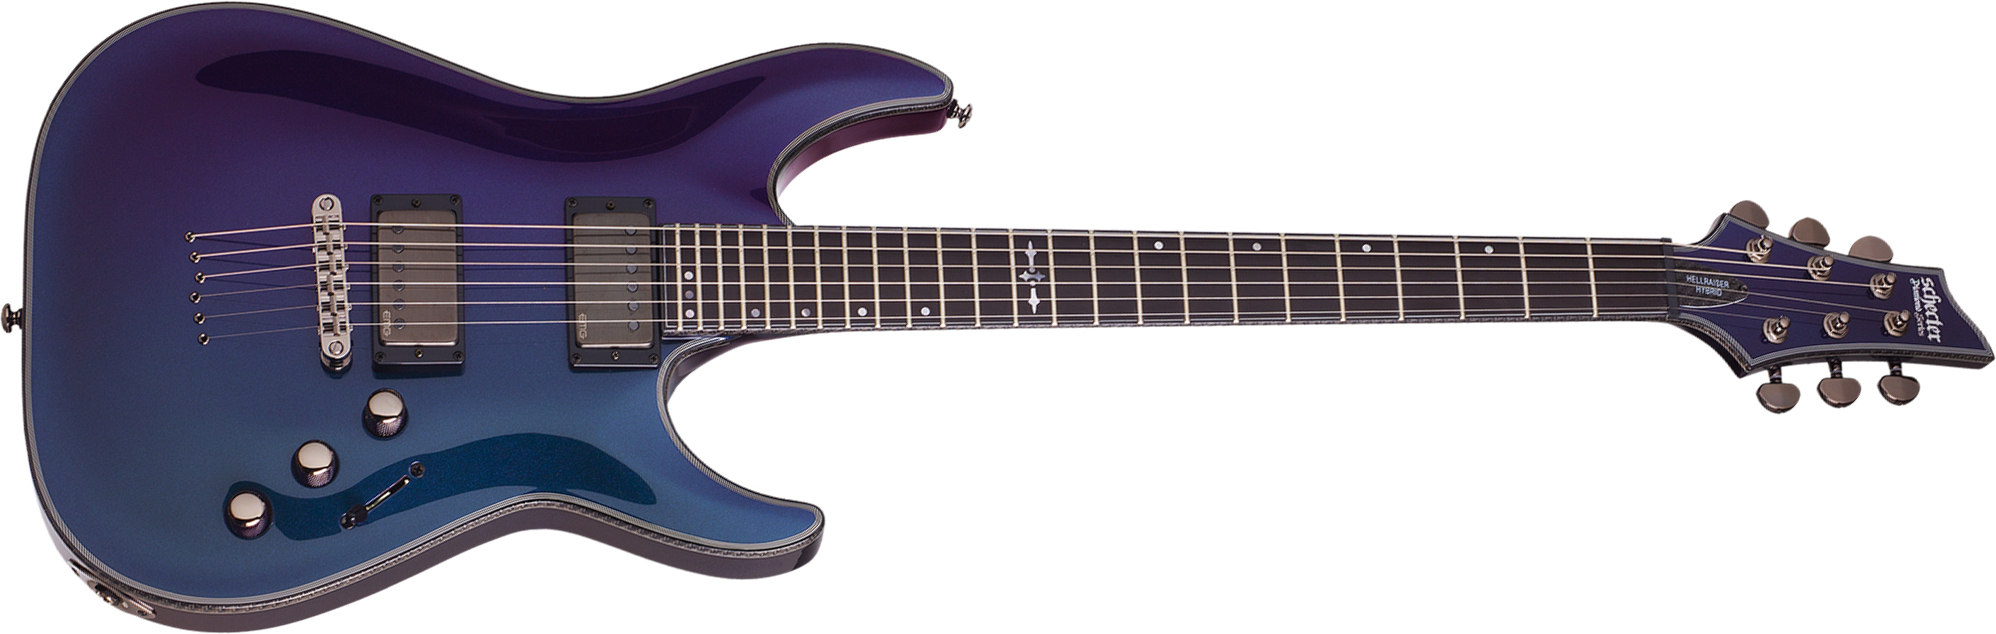 Schecter Hellraiser C-1 Hybrid 2h Emg Ht Eb - Ultra Violet - Str shape electric guitar - Main picture